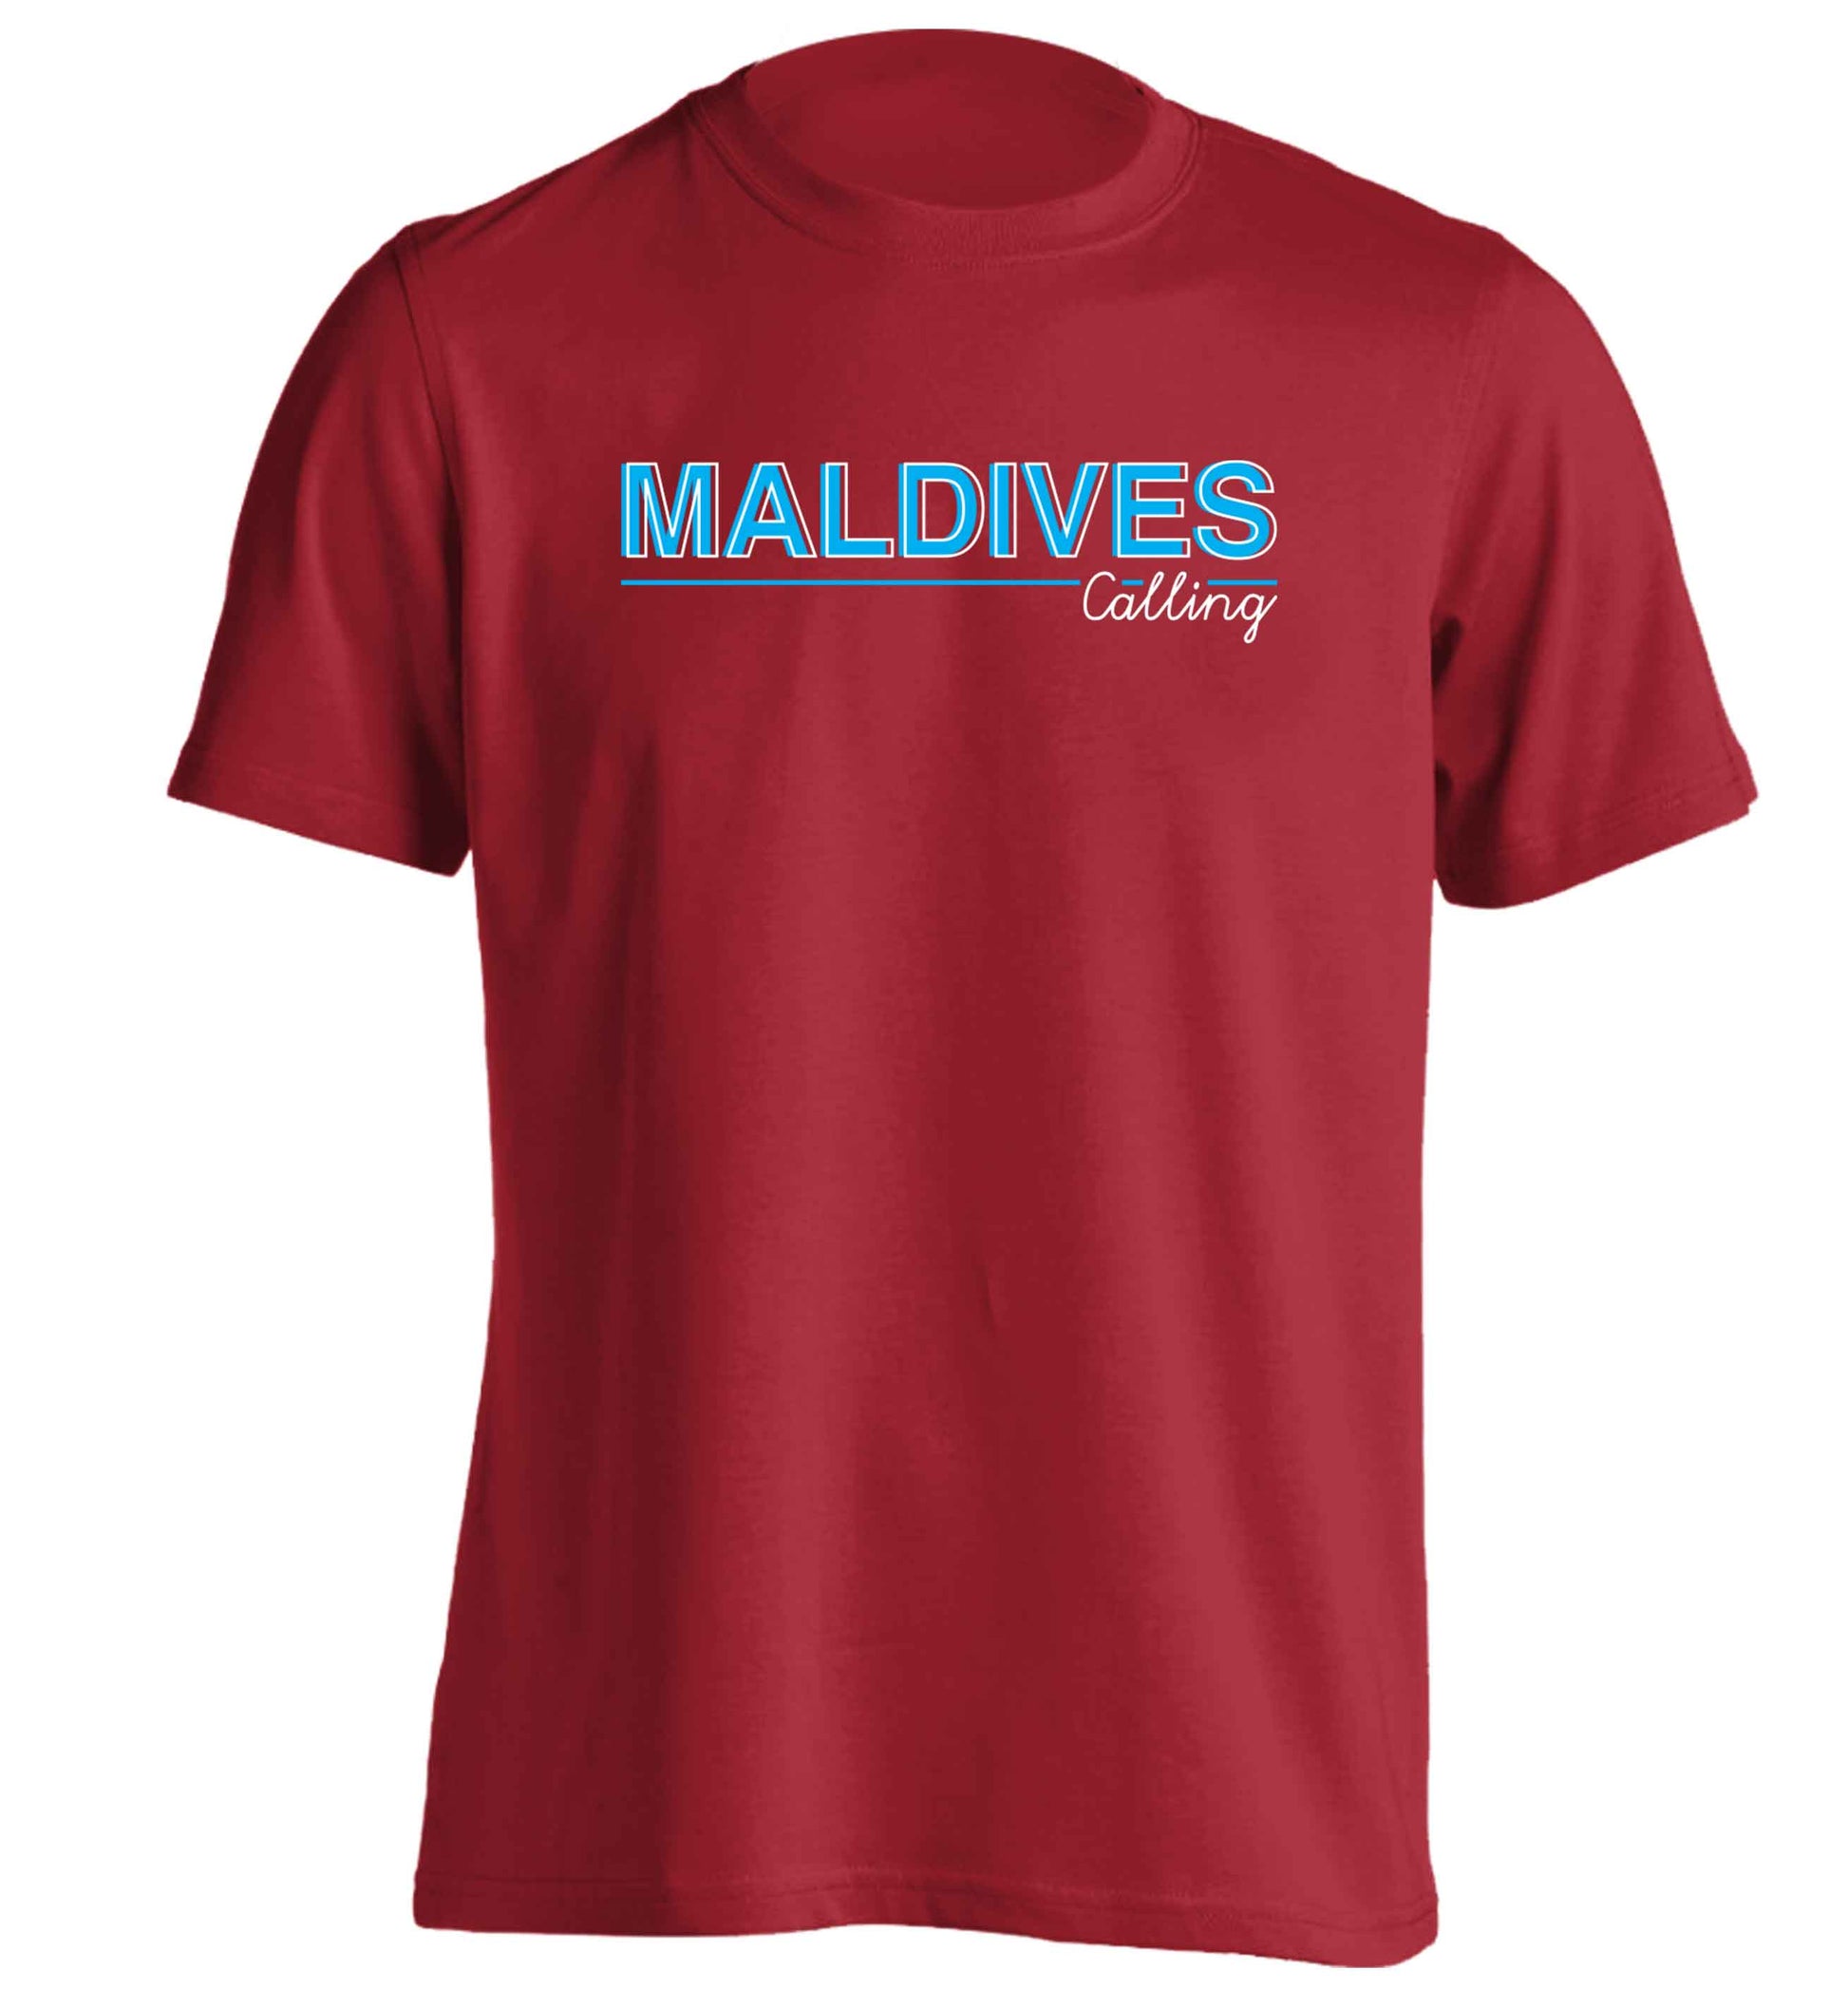 Maldives calling adults unisex red Tshirt 2XL